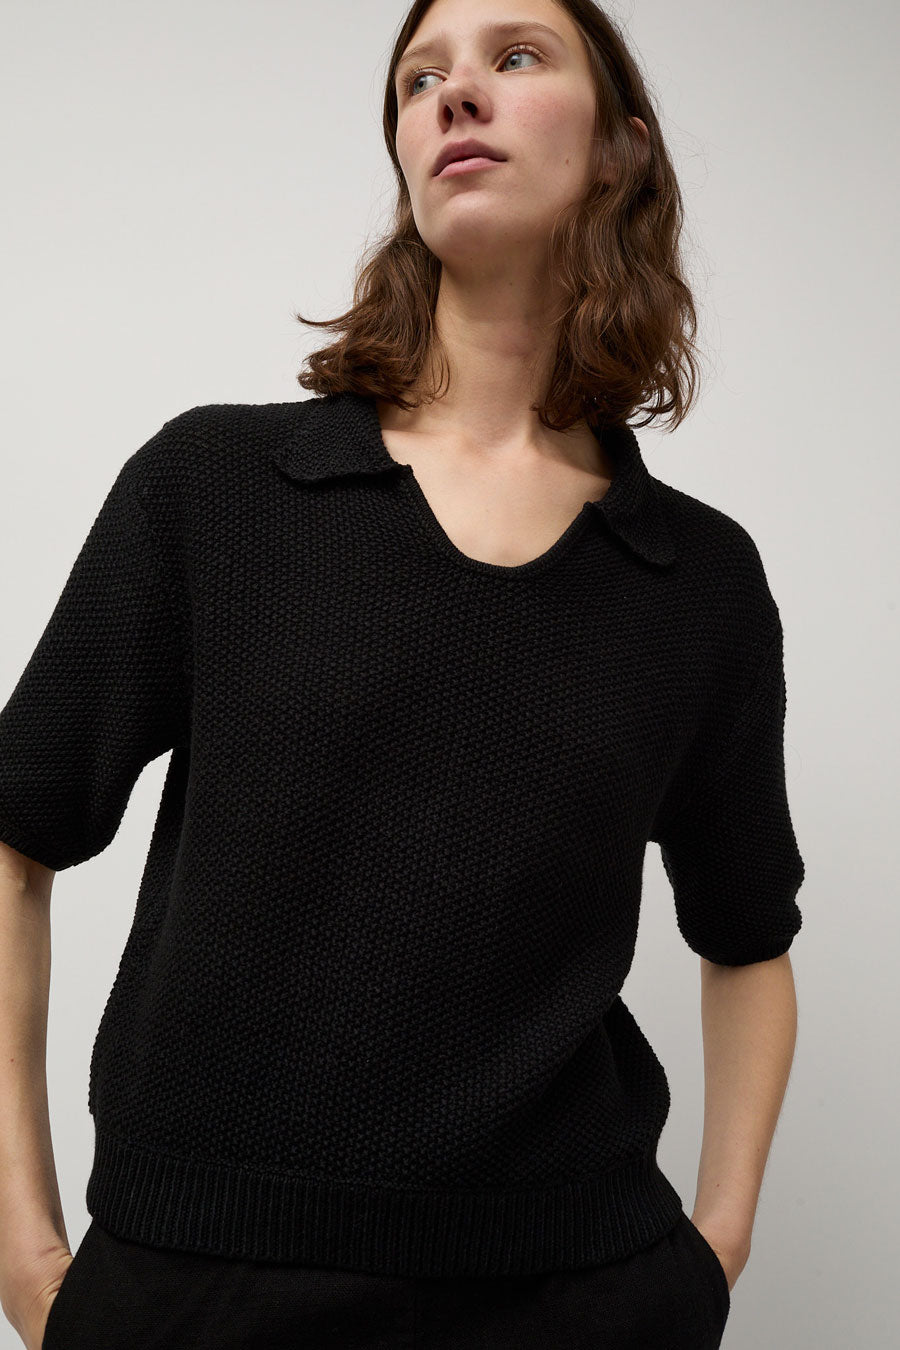 Atelier Delphine Polo Shirt in Black